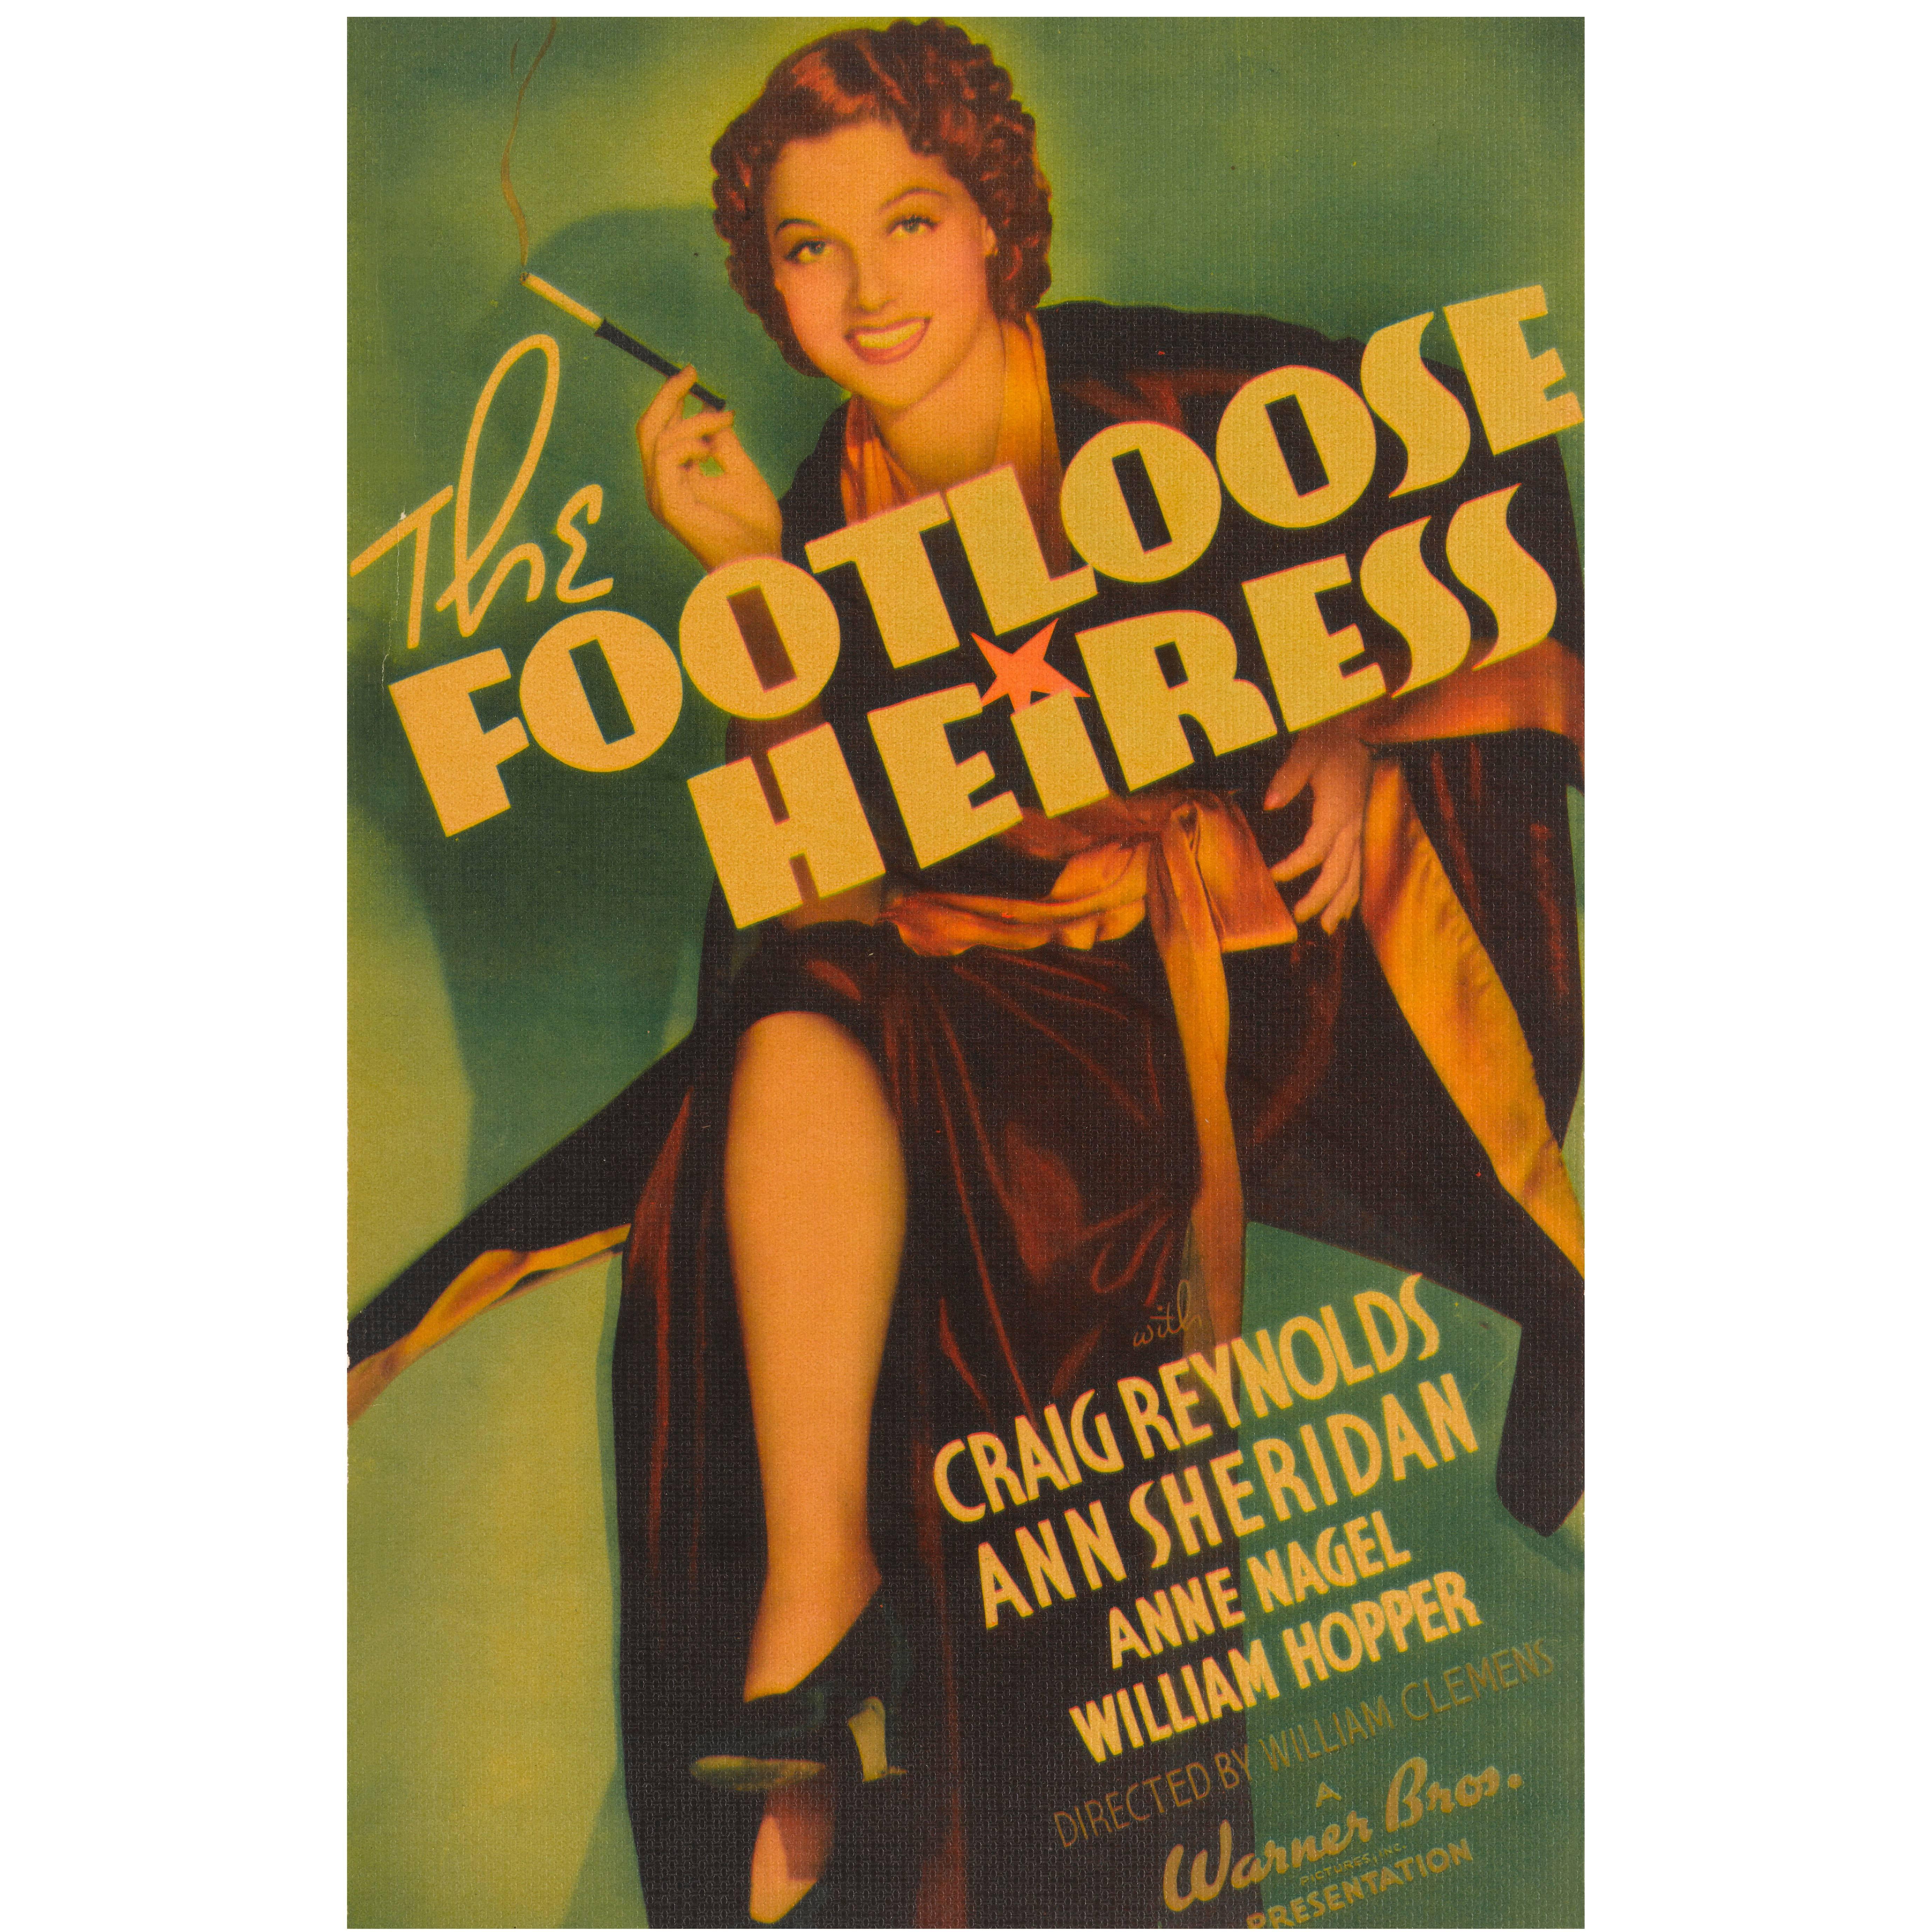 "The Footloose Heiress" Original US Movie Poster